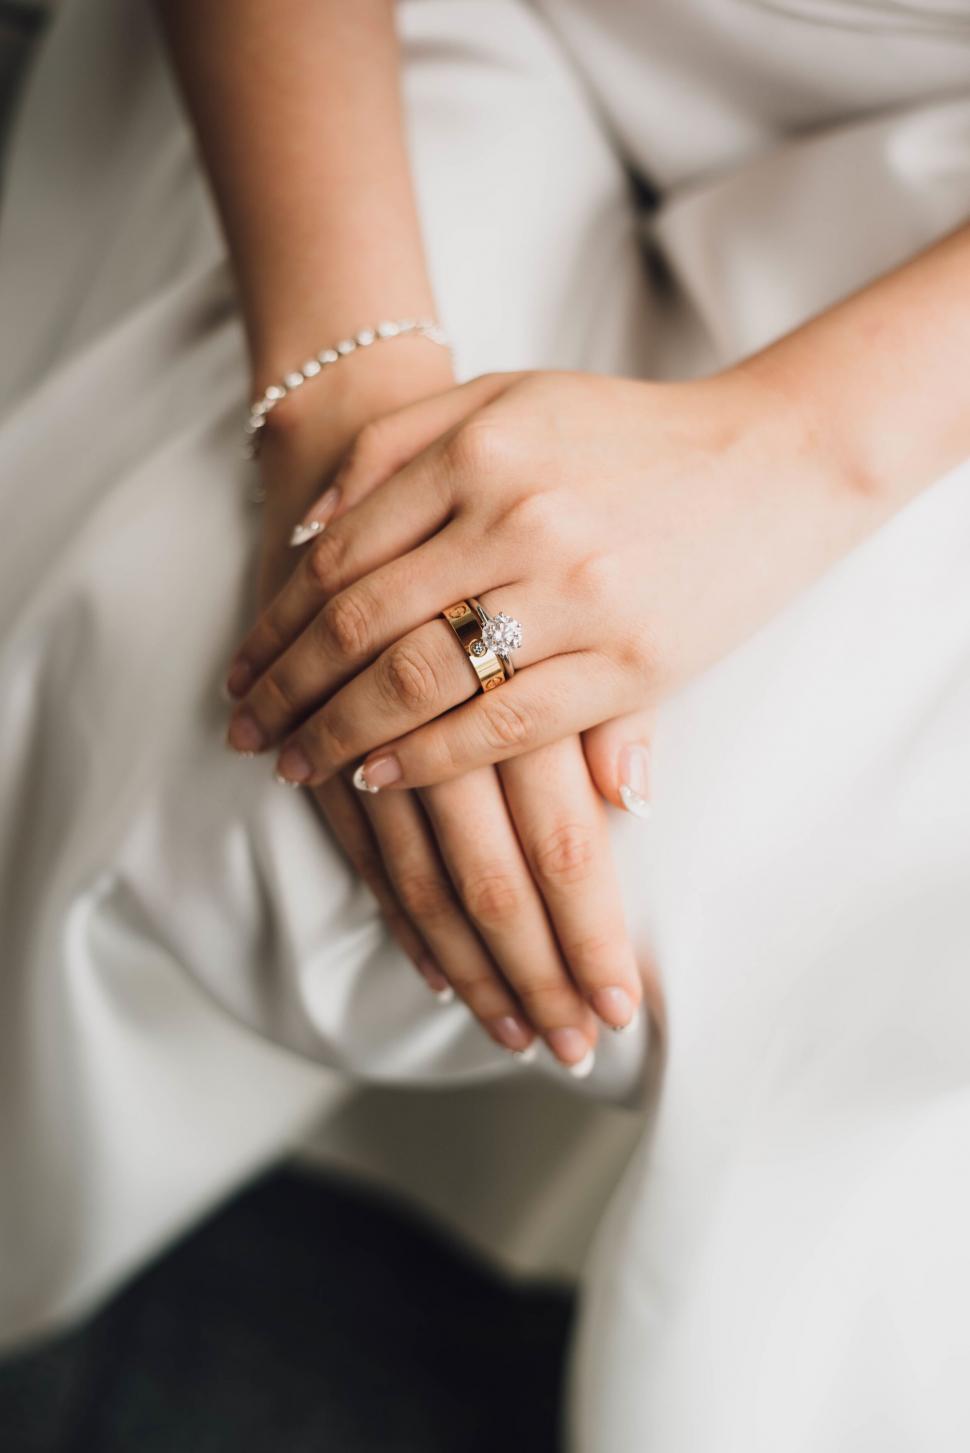 Free Image of Elegant bridal hands with diamond ring 